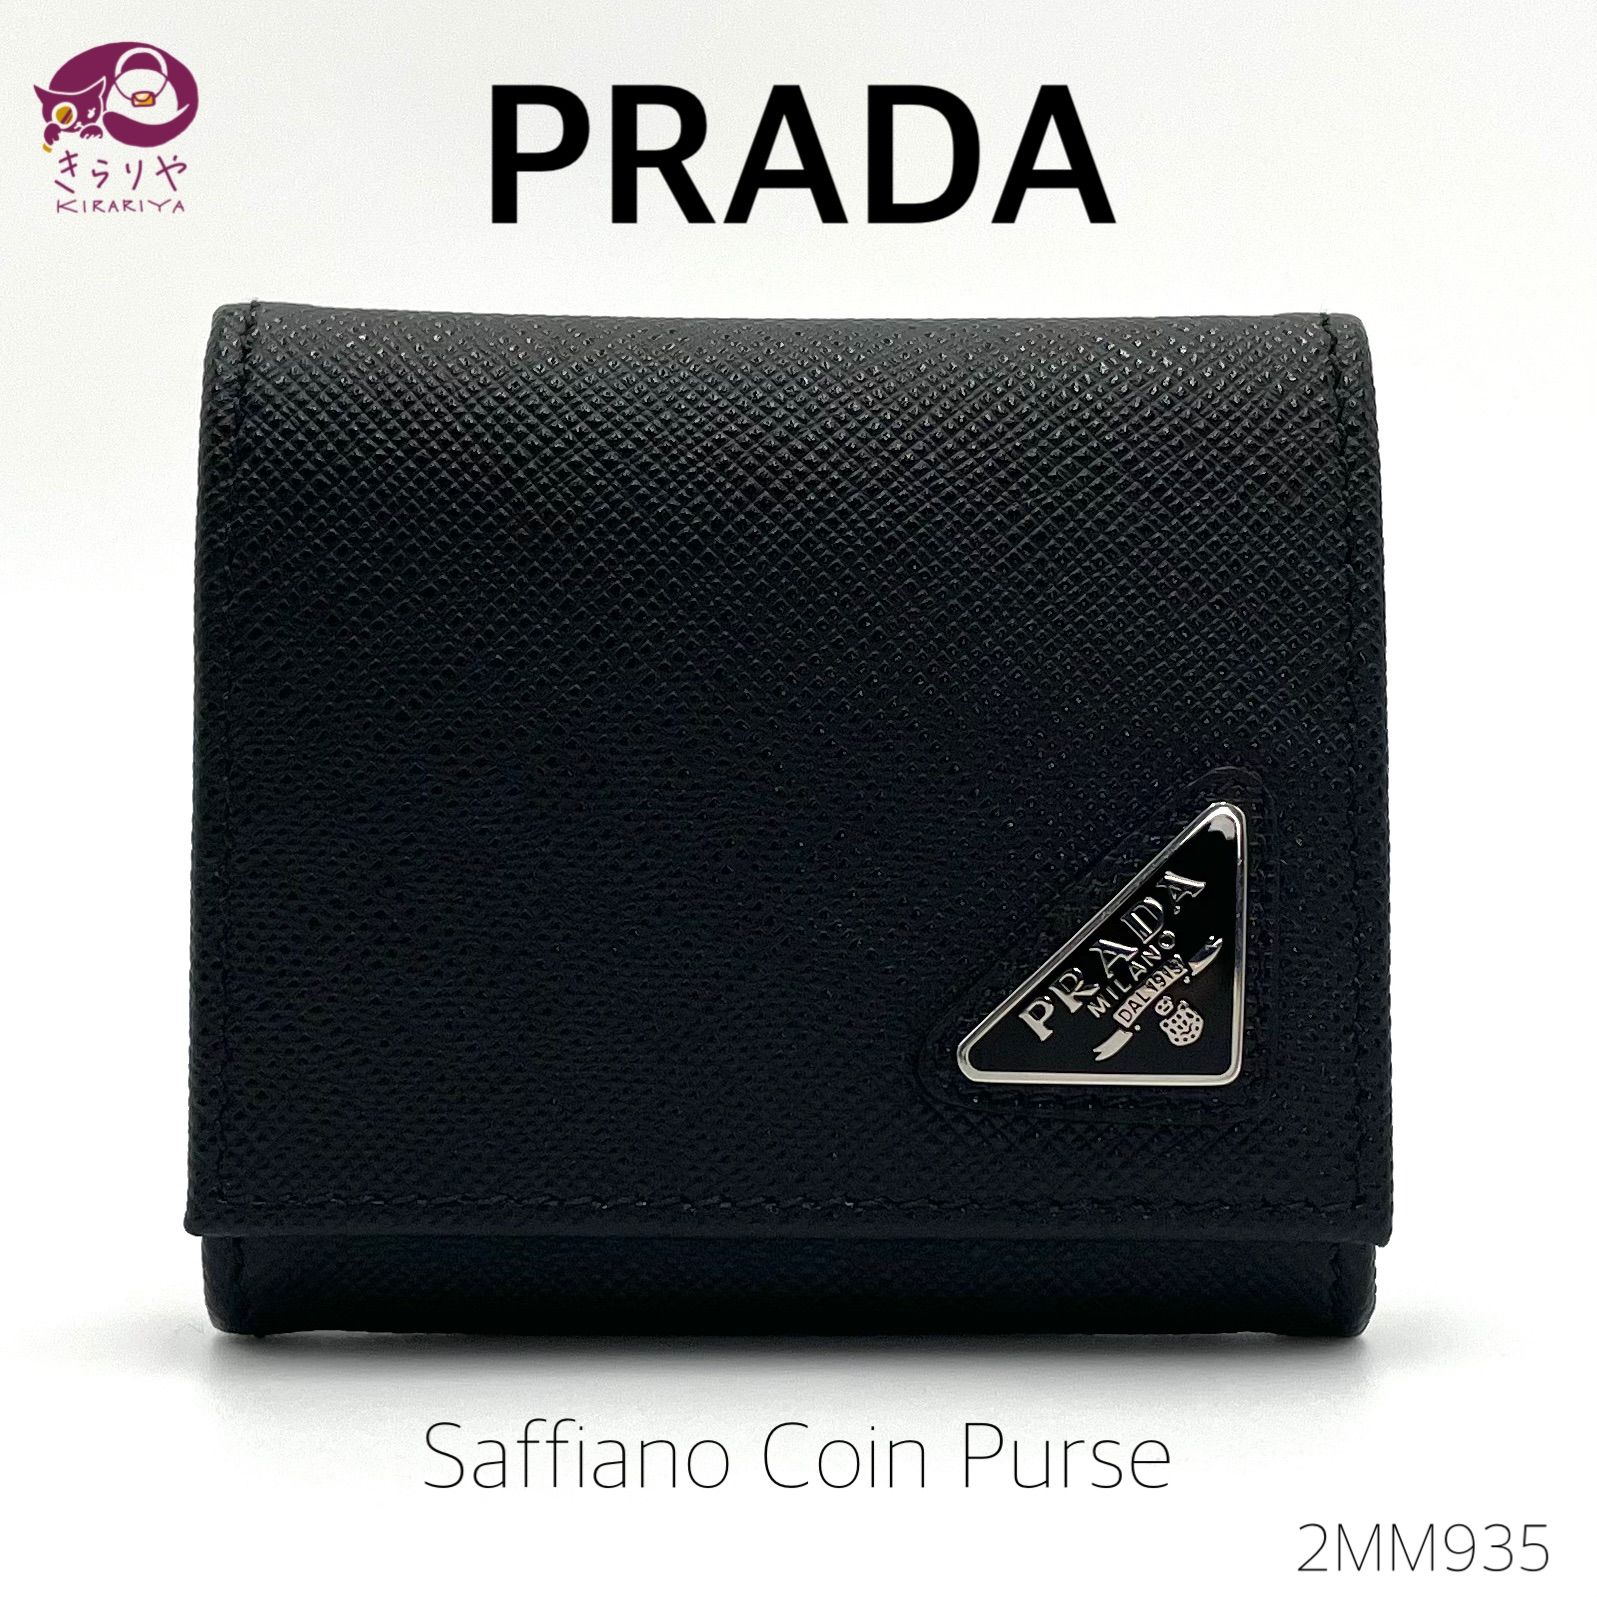 PRADA プラダ 2MM935 サフィアーノレザー 三角ロゴプレート コインケース 小銭入れ ブラック シルバー金具